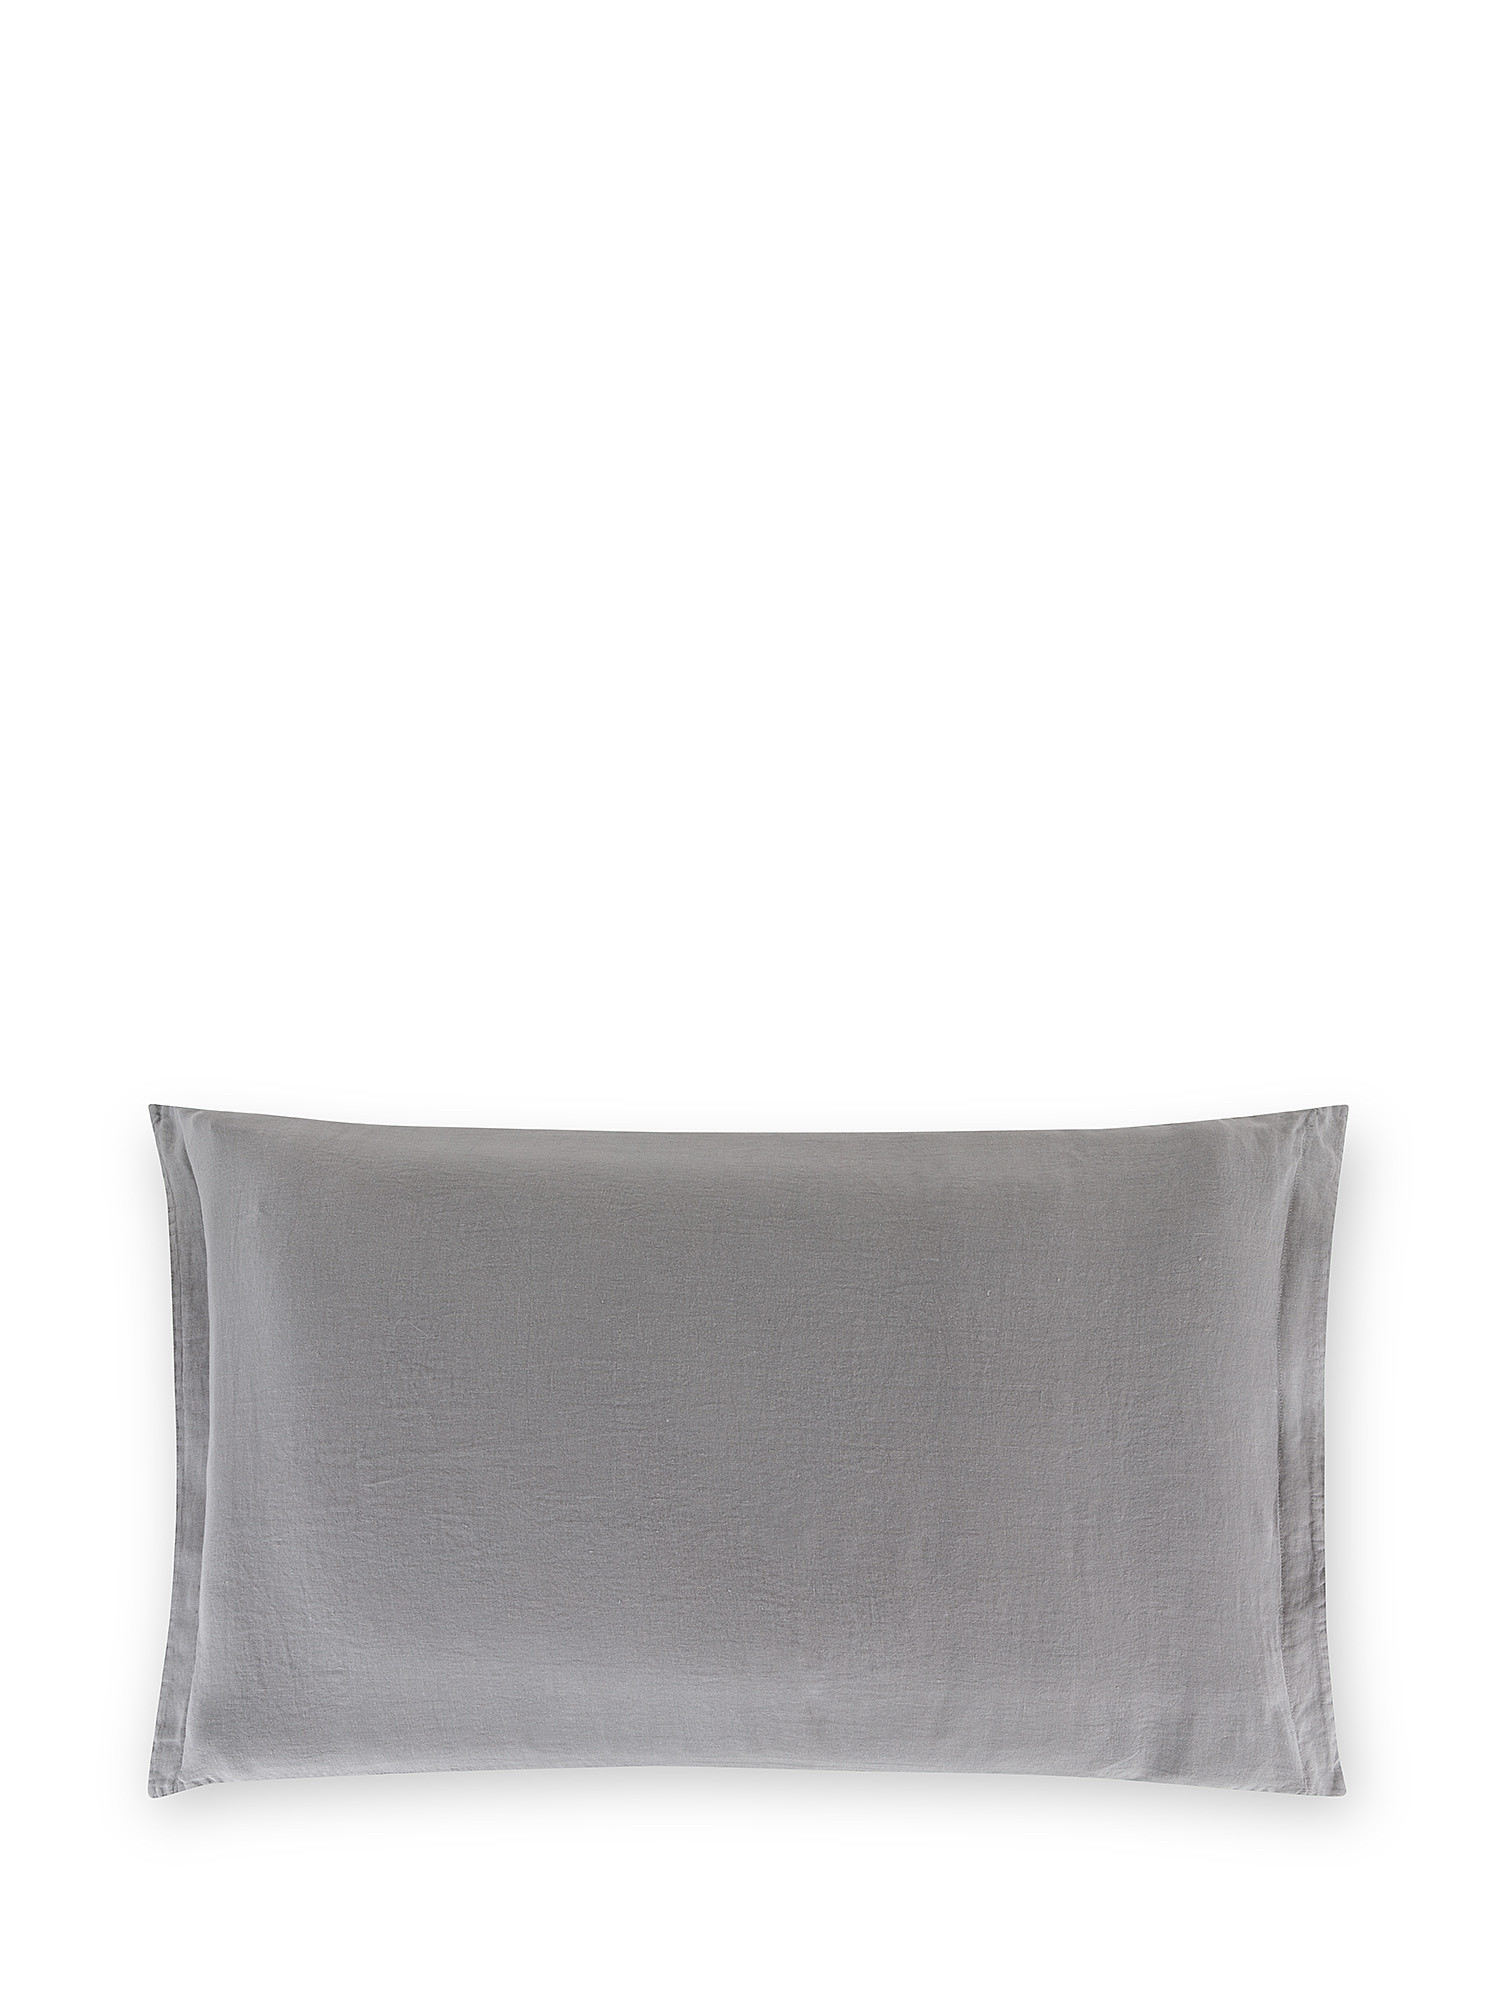 Zefiro plain color linen and cotton pillowcase, Dark Grey, large image number 0